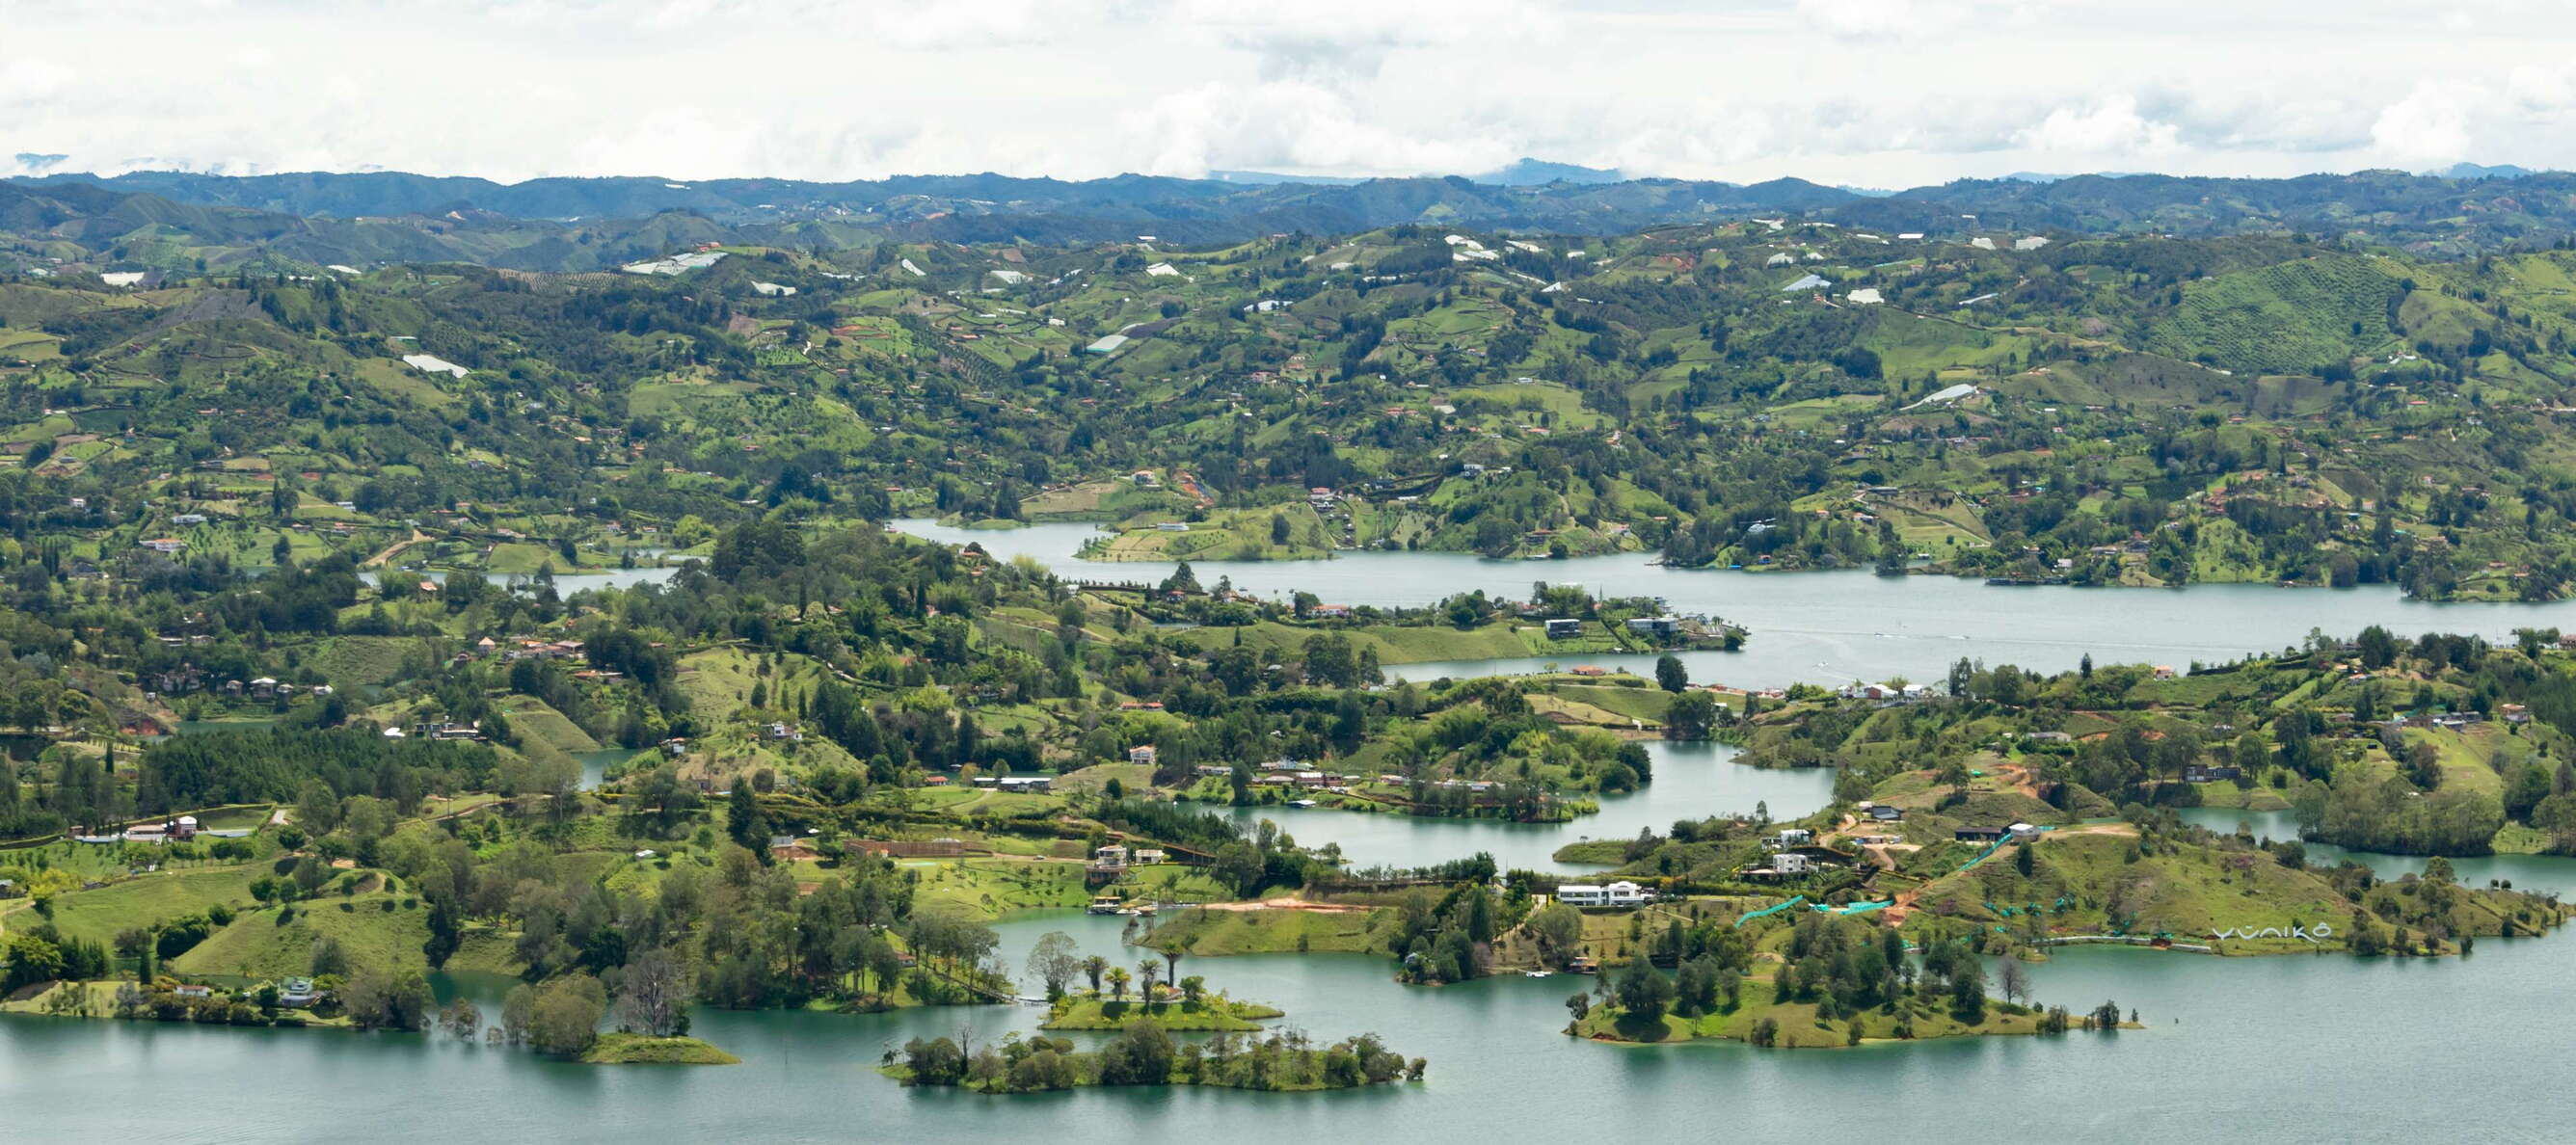 Eastern highlands of Antioquia with Embalse Peñol-Guatapé